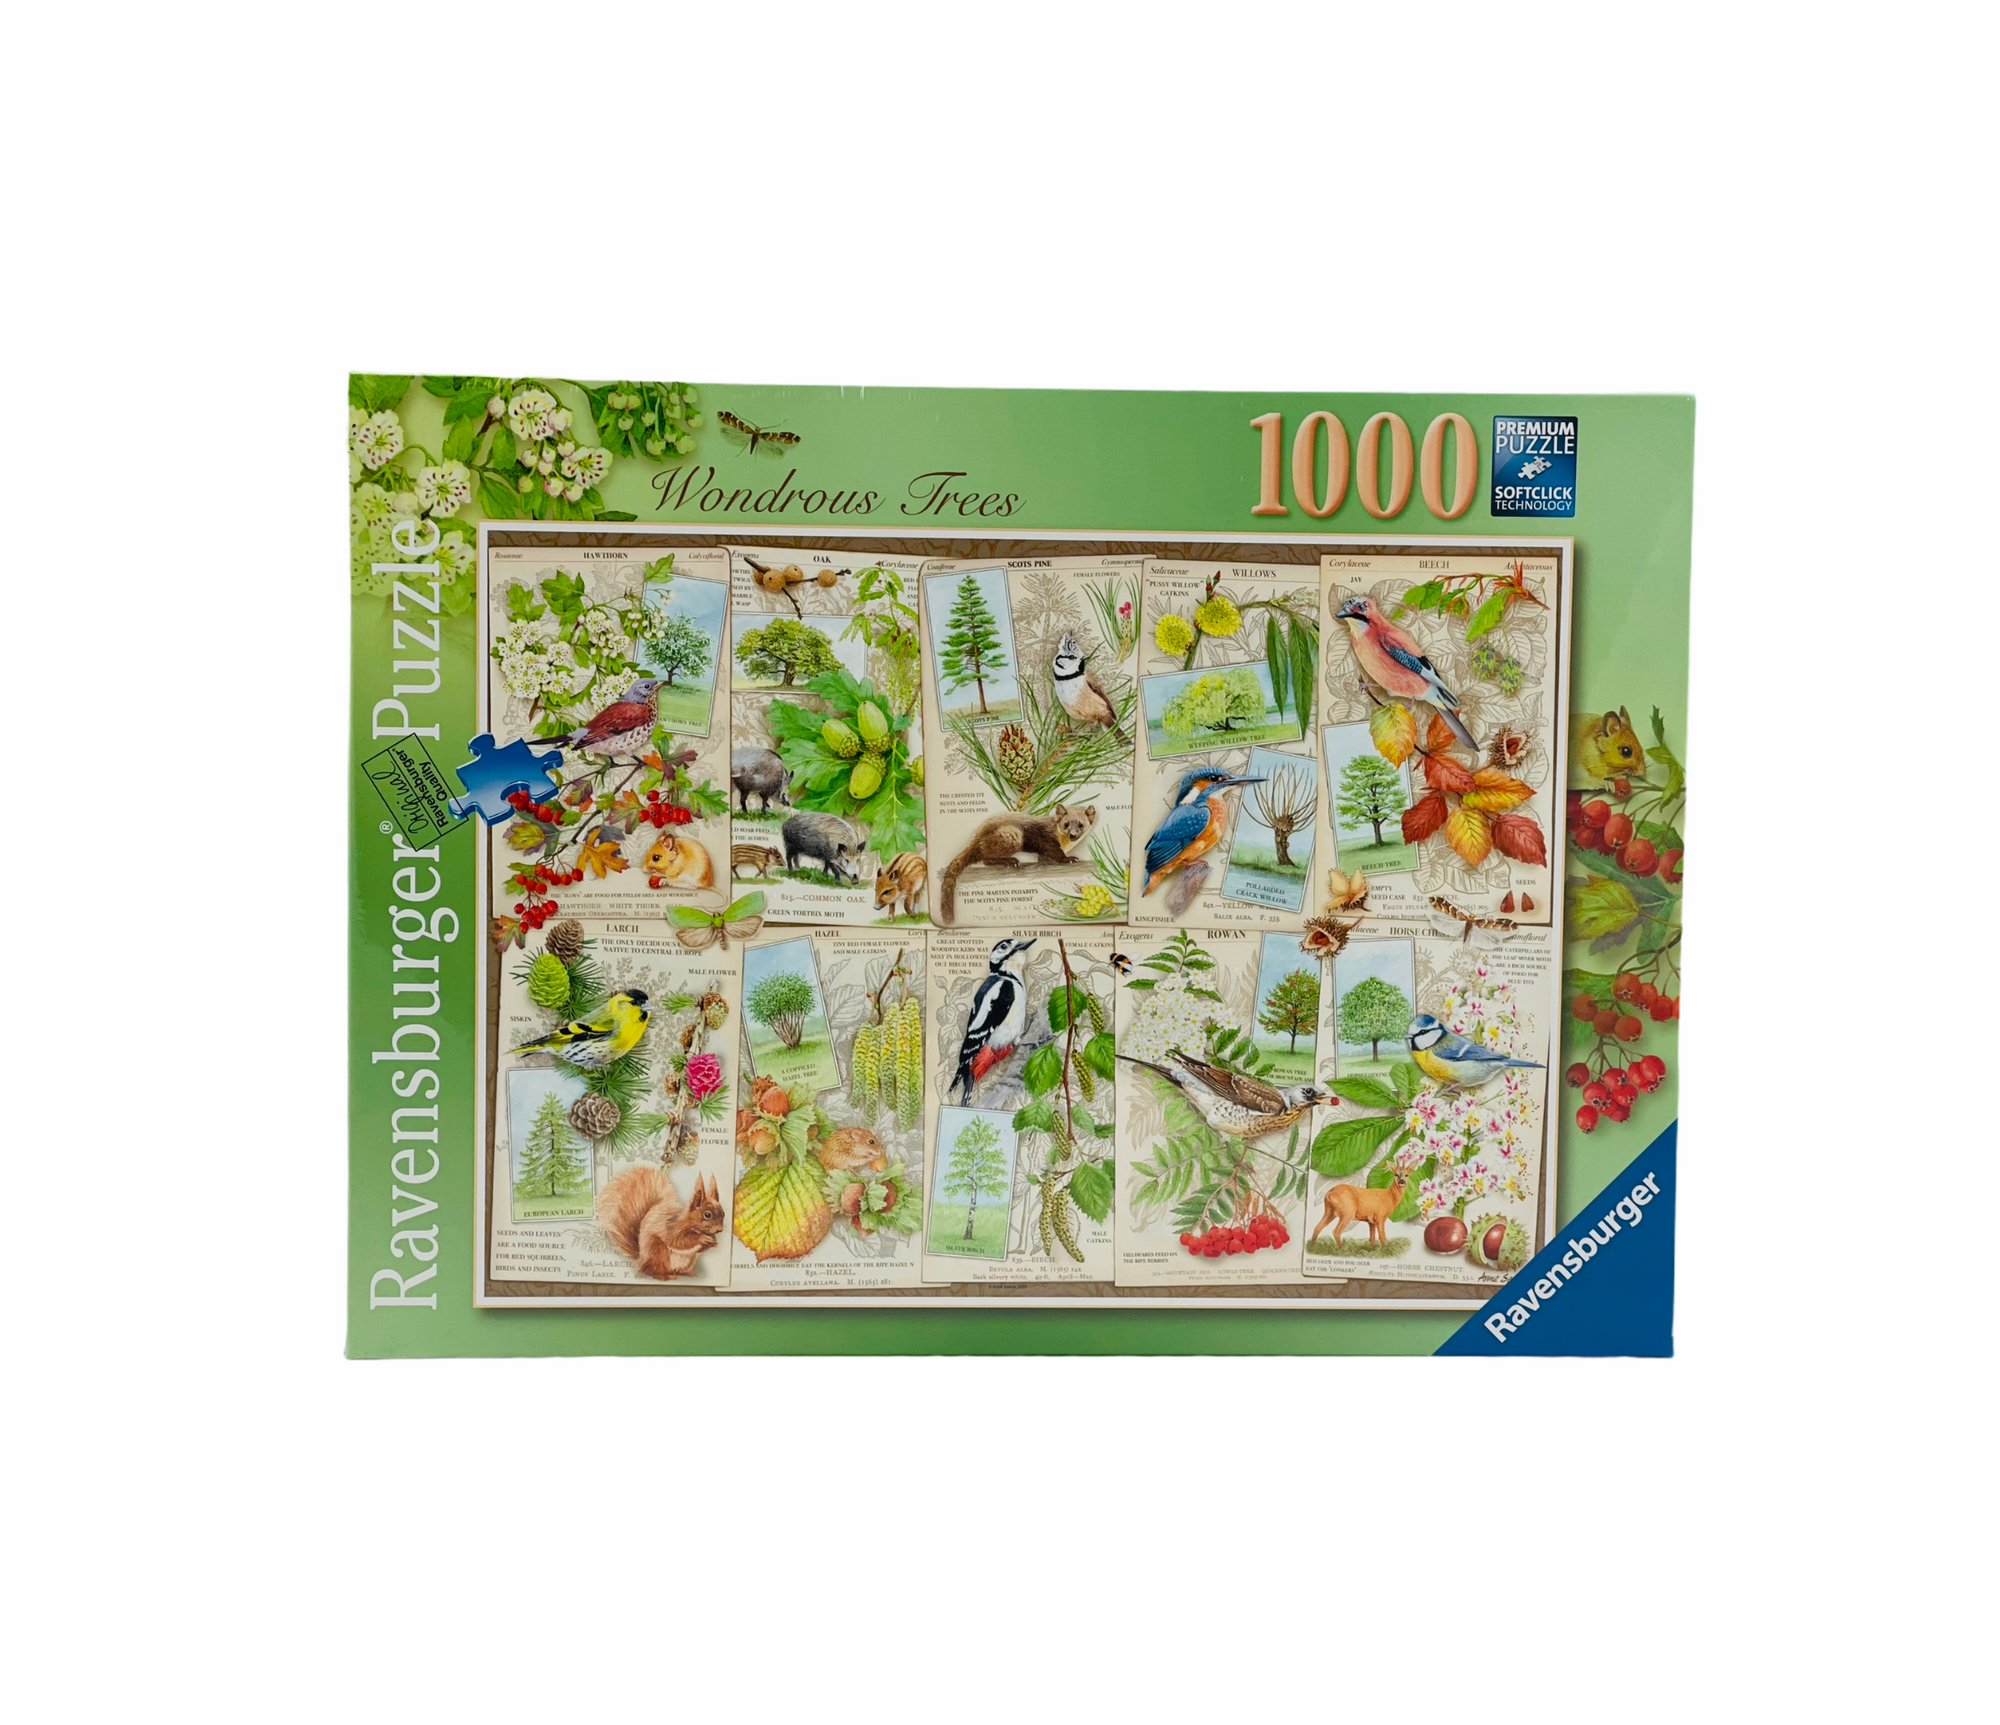 Ravensburger Puzzle - Wondrous Trees 1000